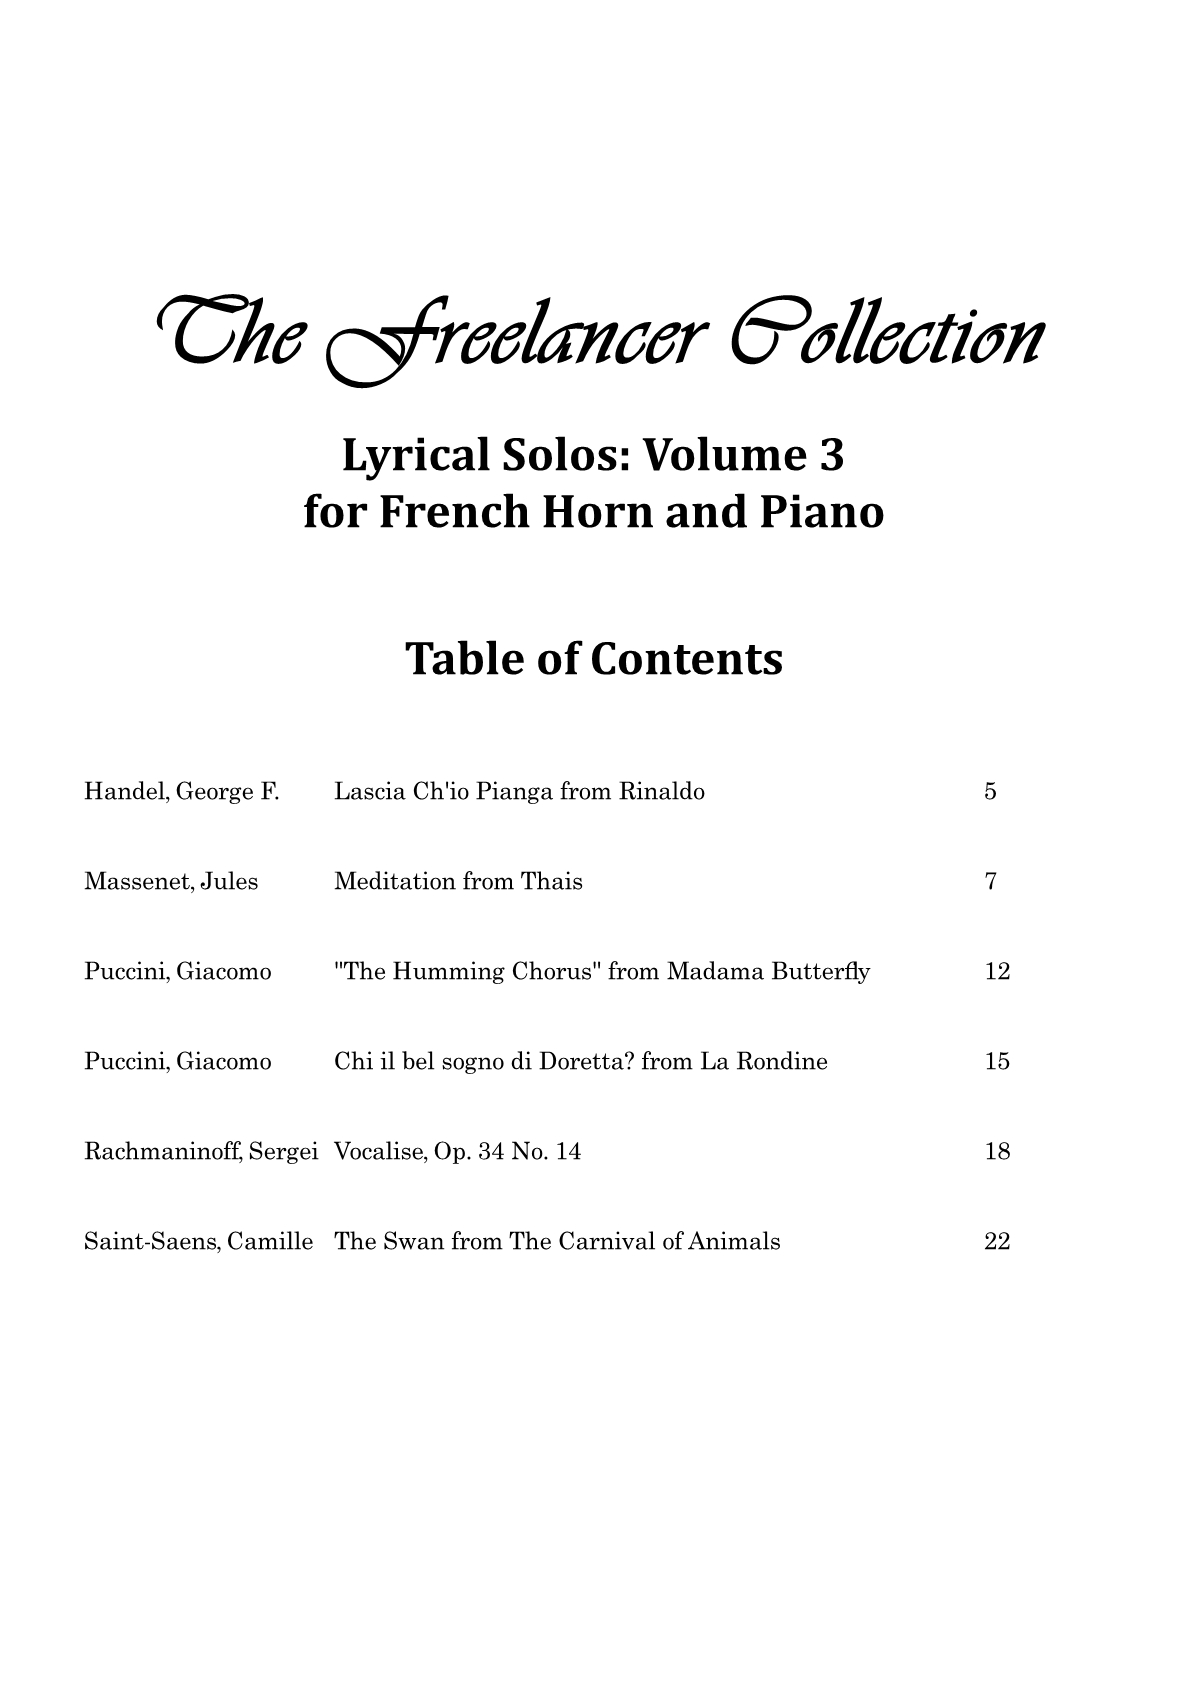 Hepler - Freelancer Collection Lyrical Solos Vol 4 (Hrn & Piano)